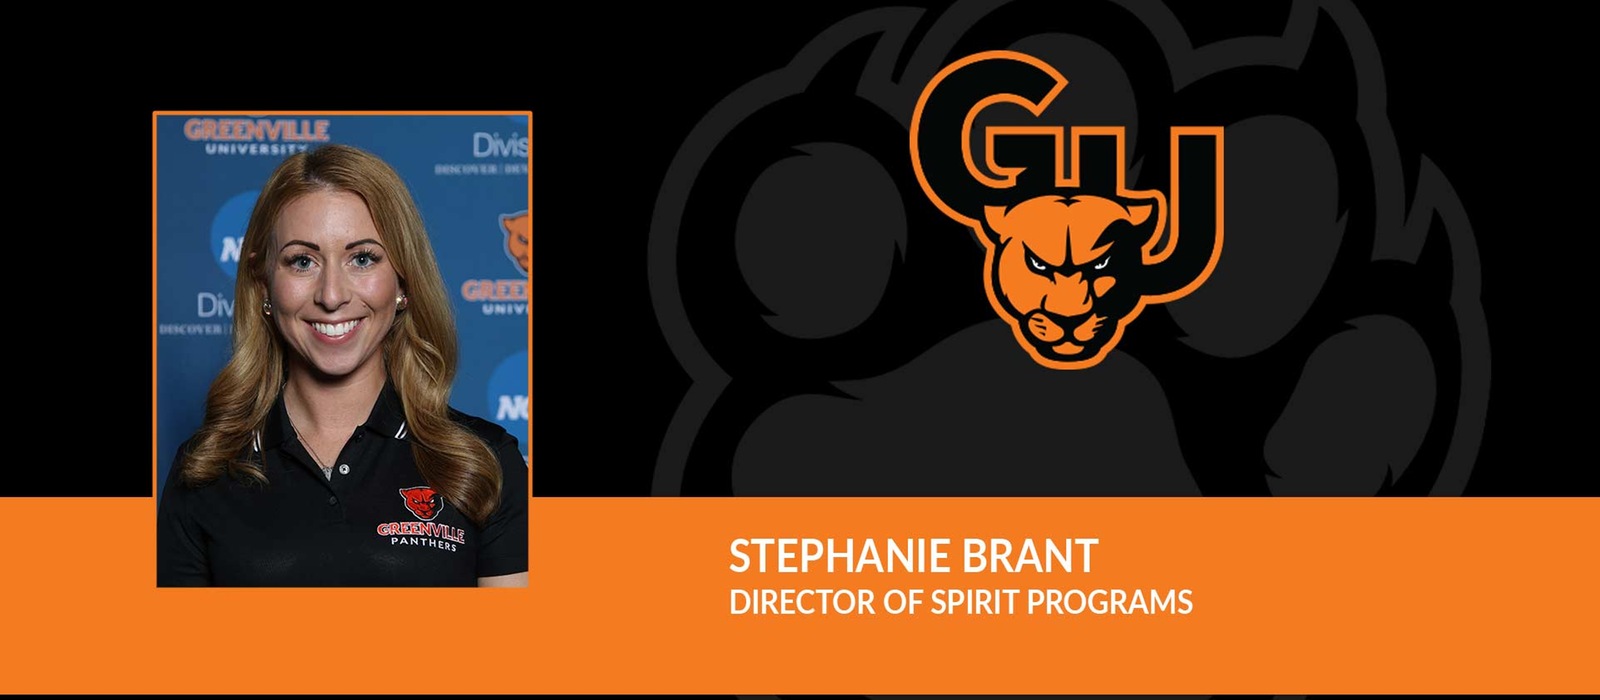 Stephanie Brant selected as director of spirit programs